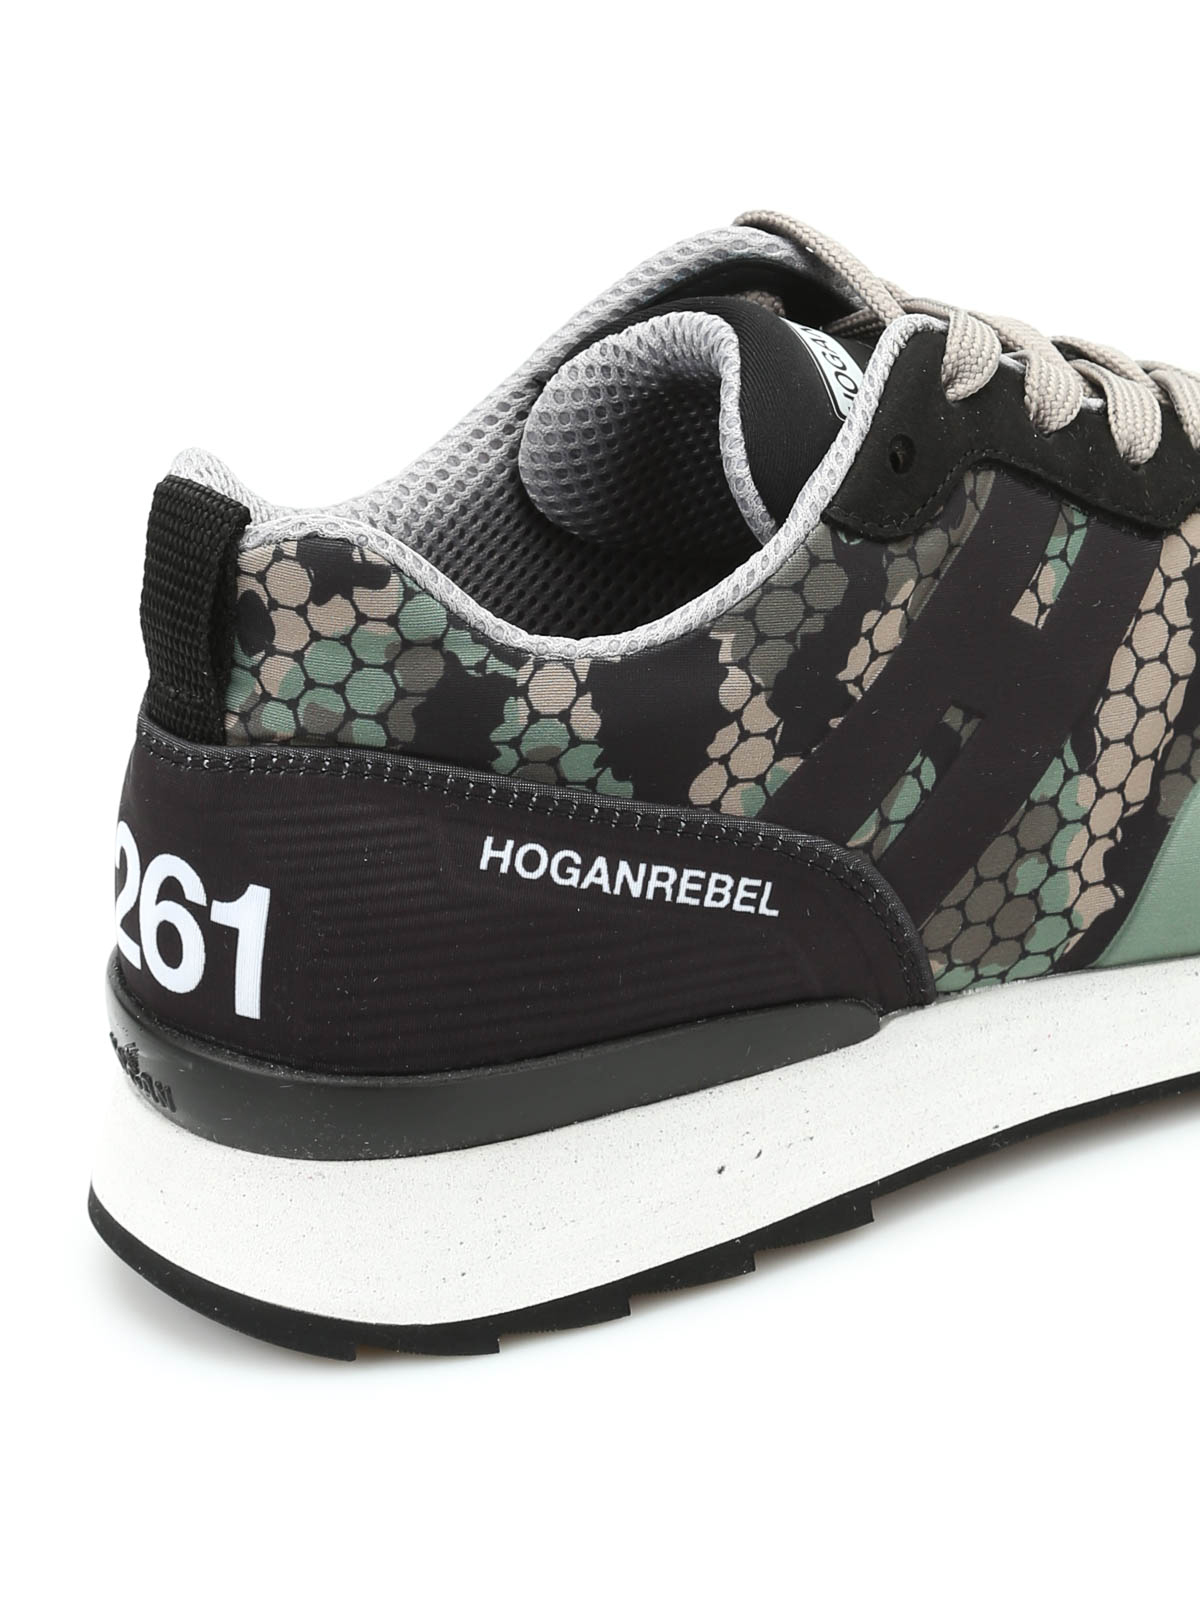 hogan r261 sneakers